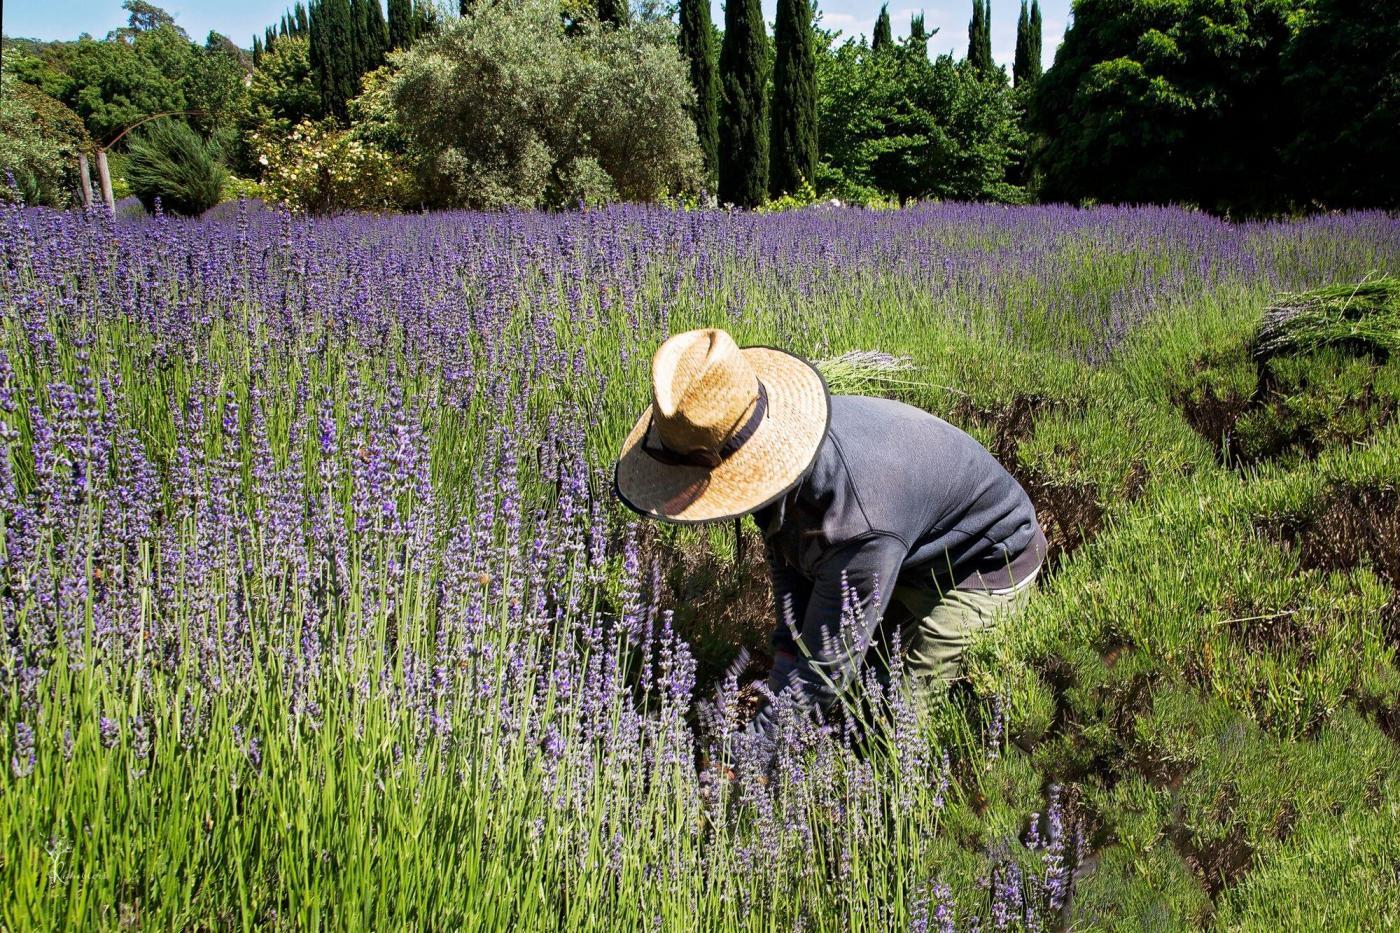 harvesting lavender by hand